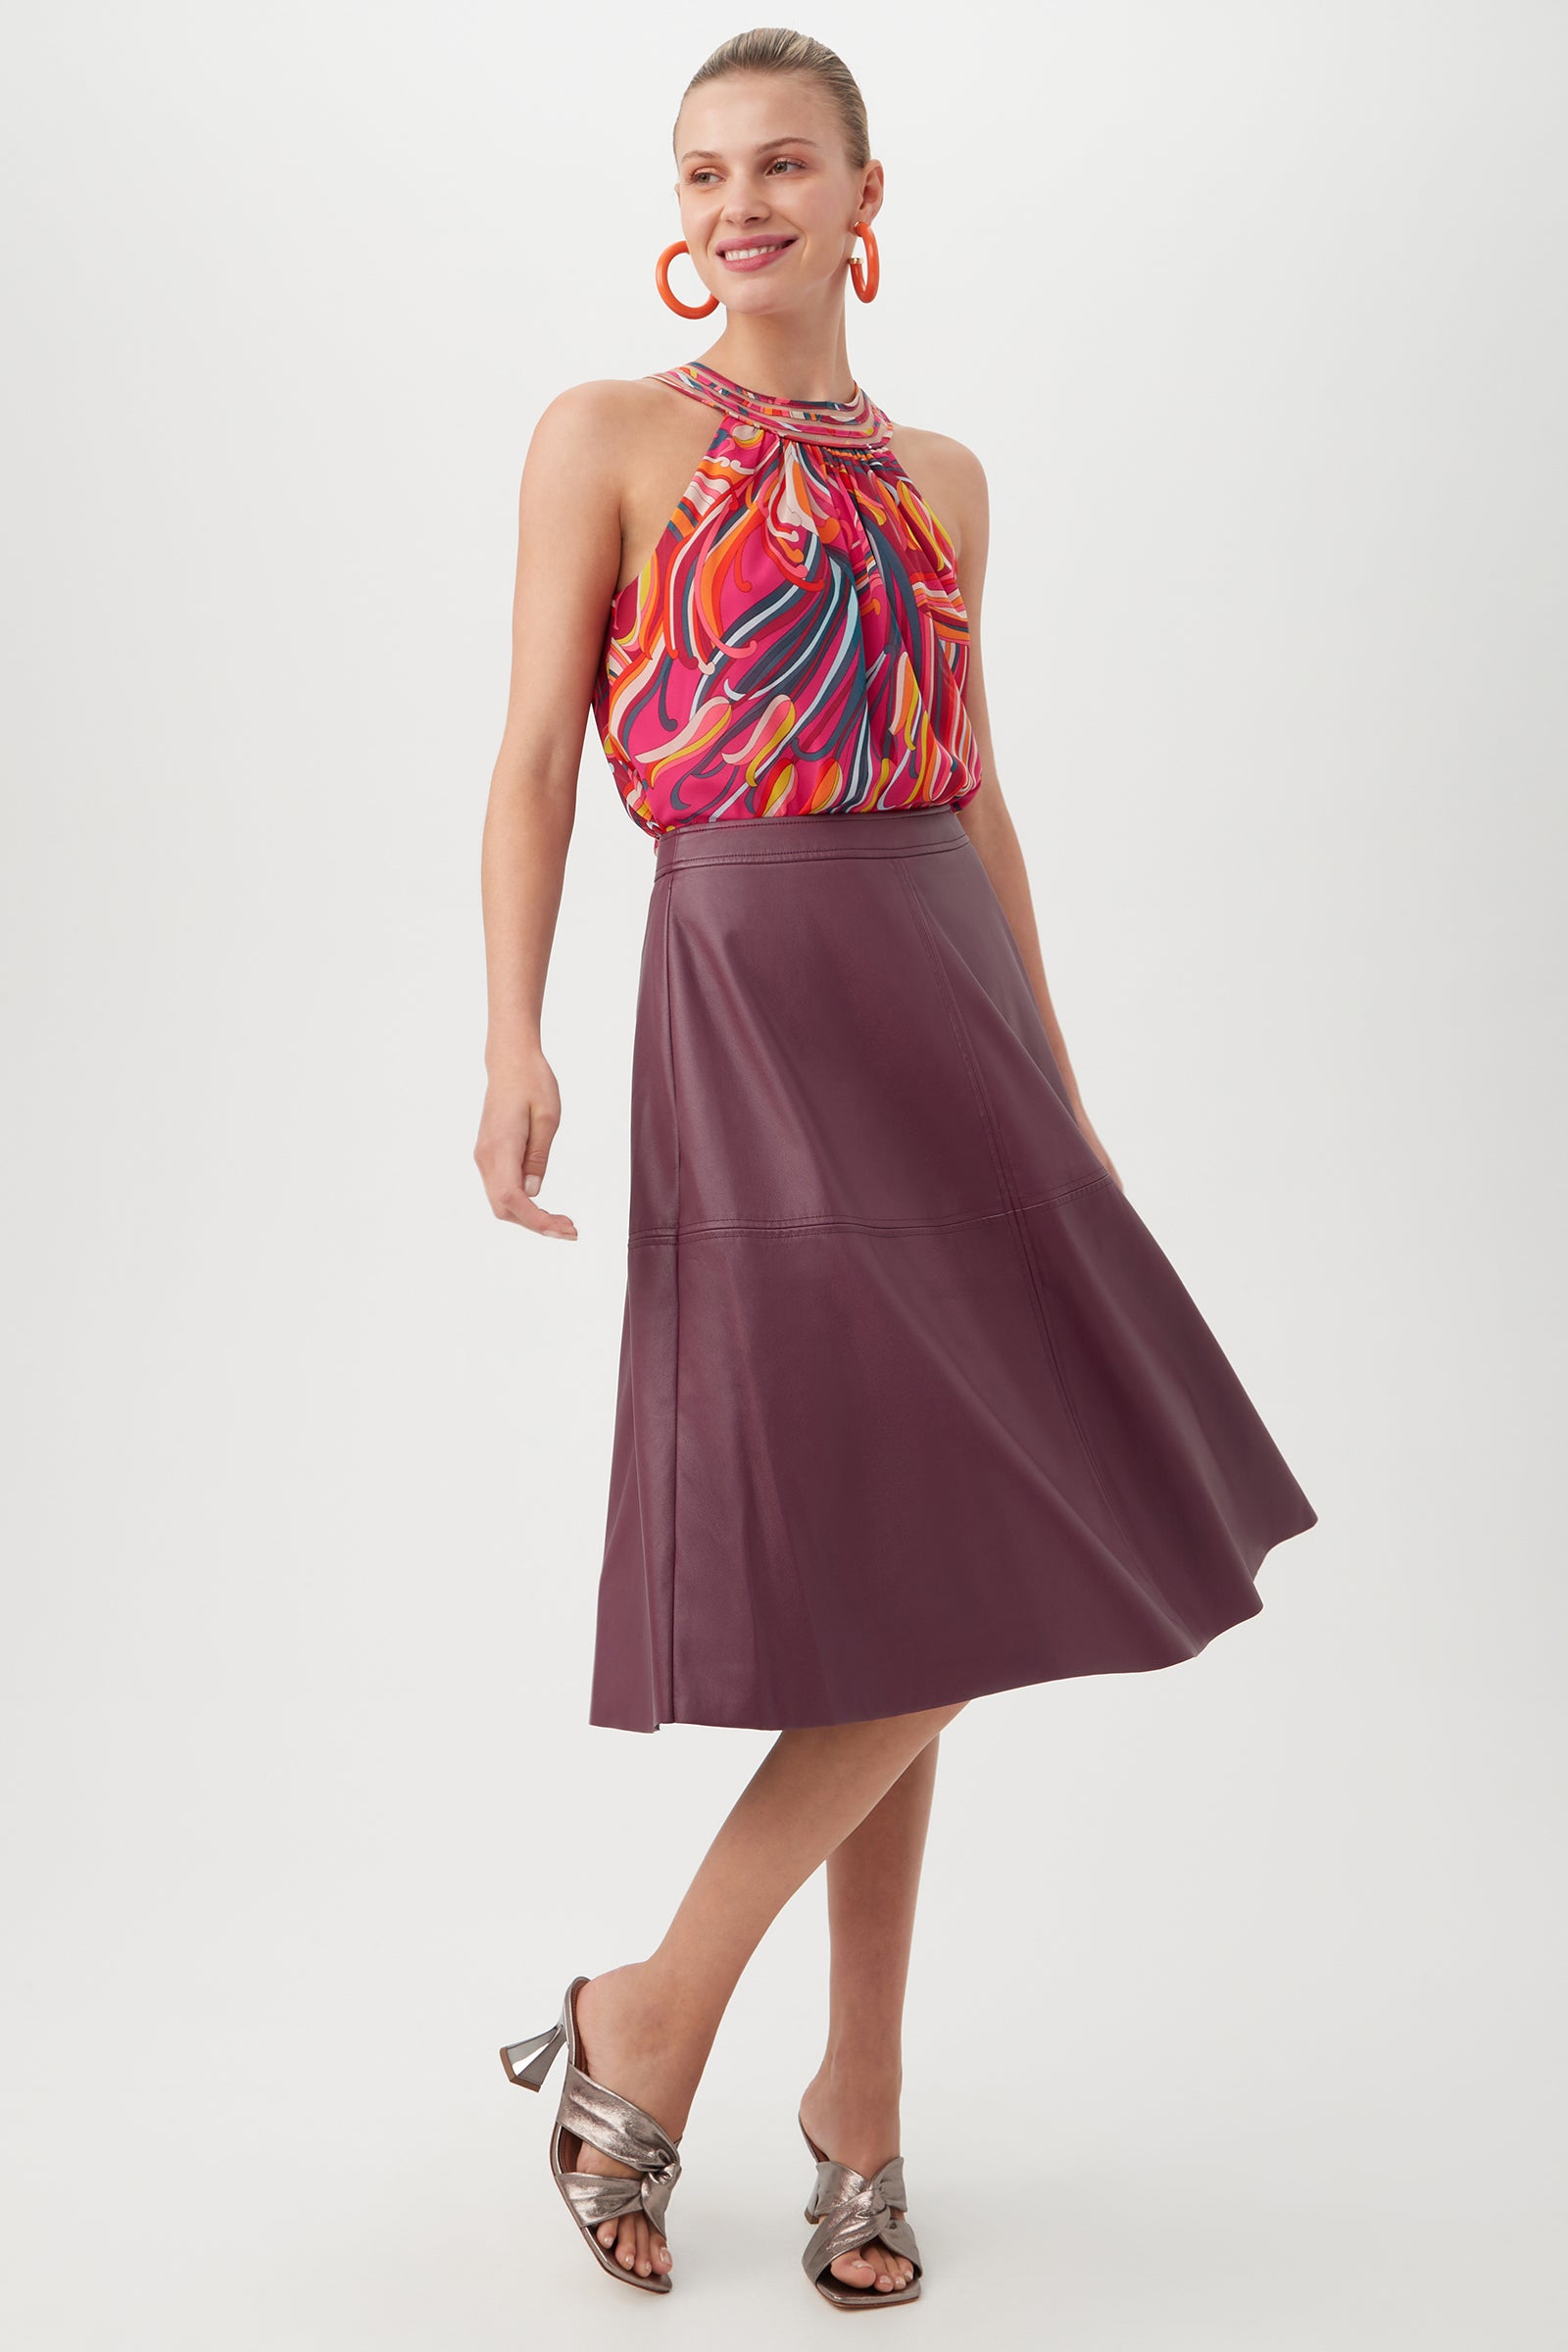 Ashby Stripe Skirt by Trina Turk for $45